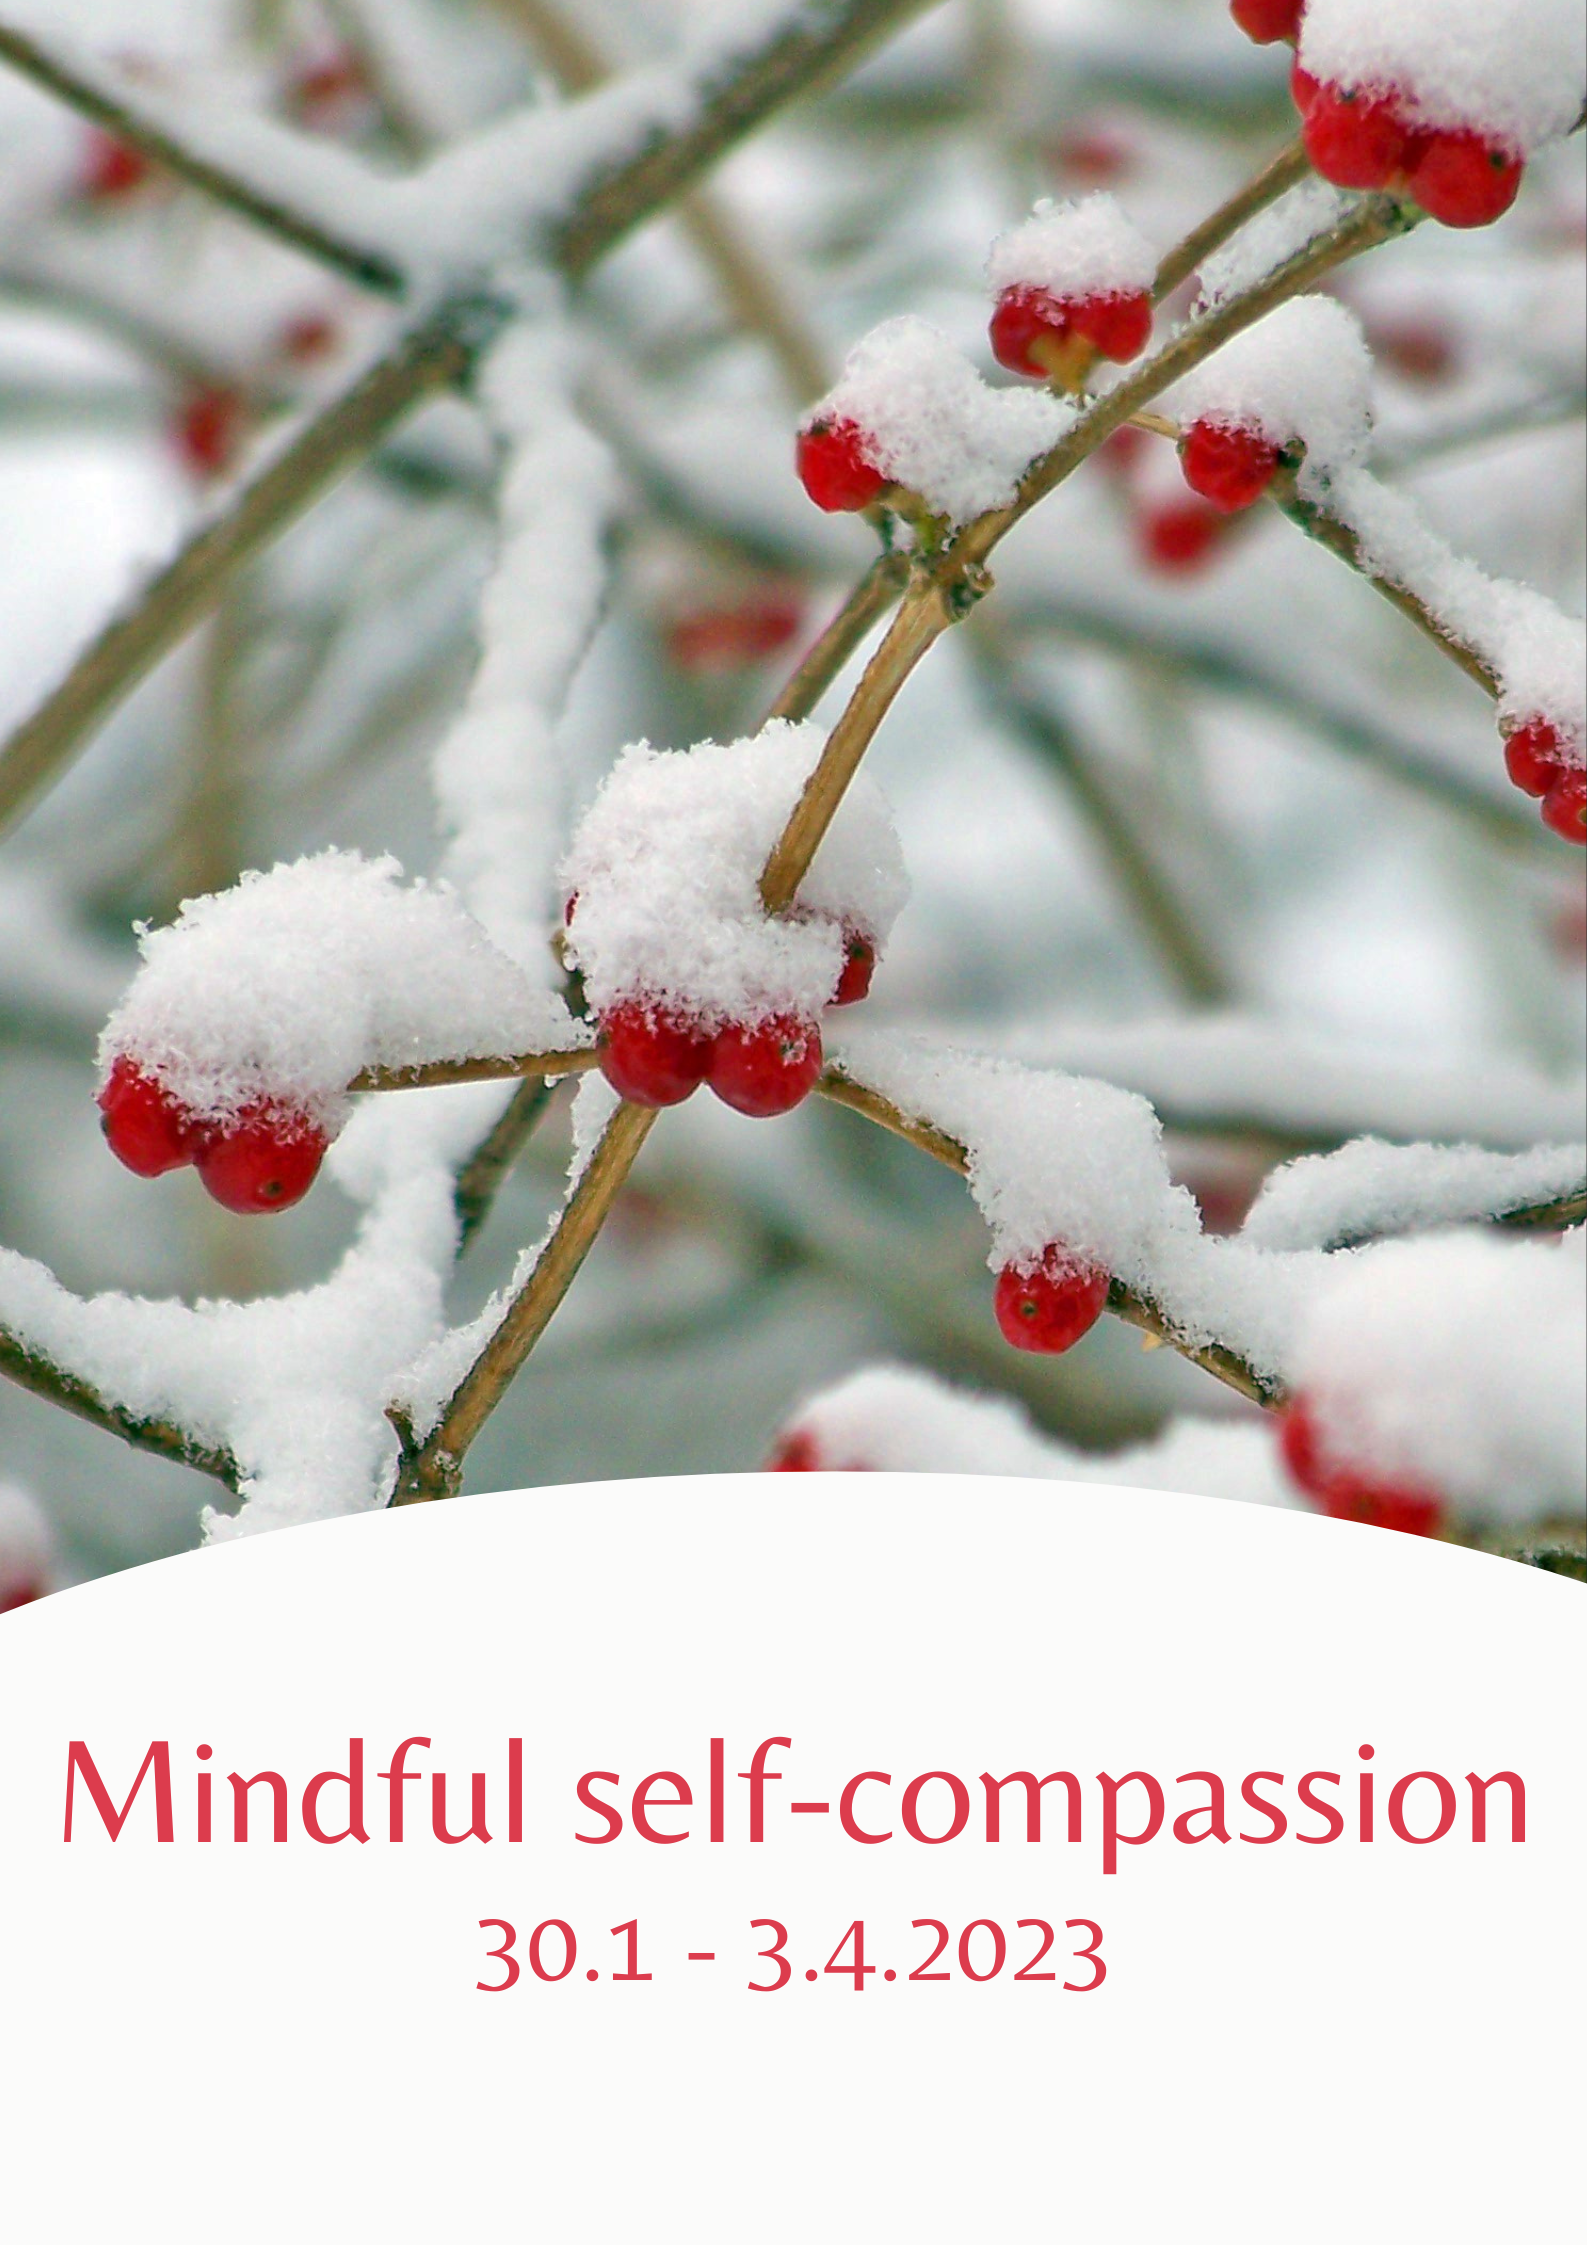 Mindful Self-Compassion